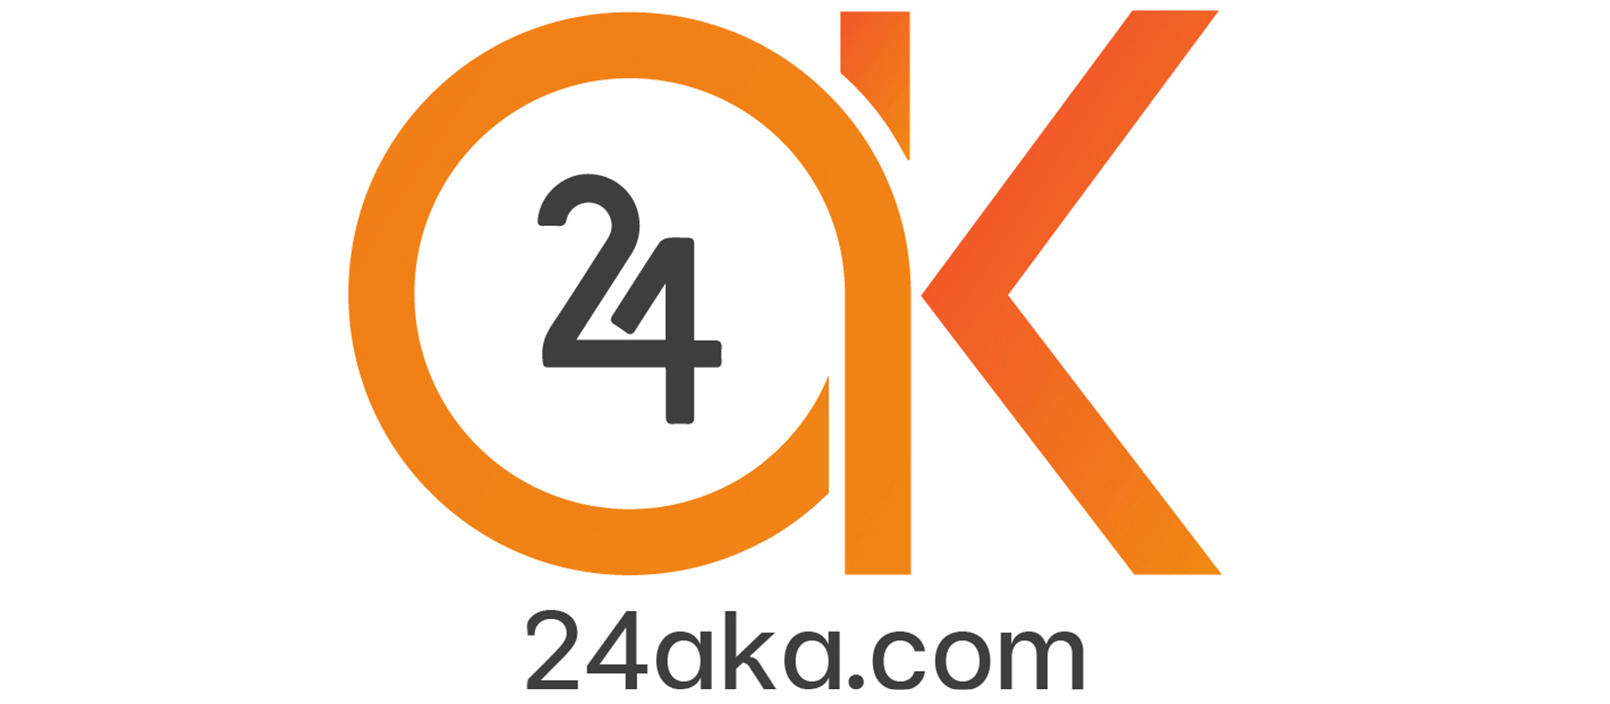 24aka.com I สินค้าราคาถูก I แหล่งช็อปปิ้งออนไลน์ ใหม่ล่าสุด ส่งฟรีเก็บปลายทาง